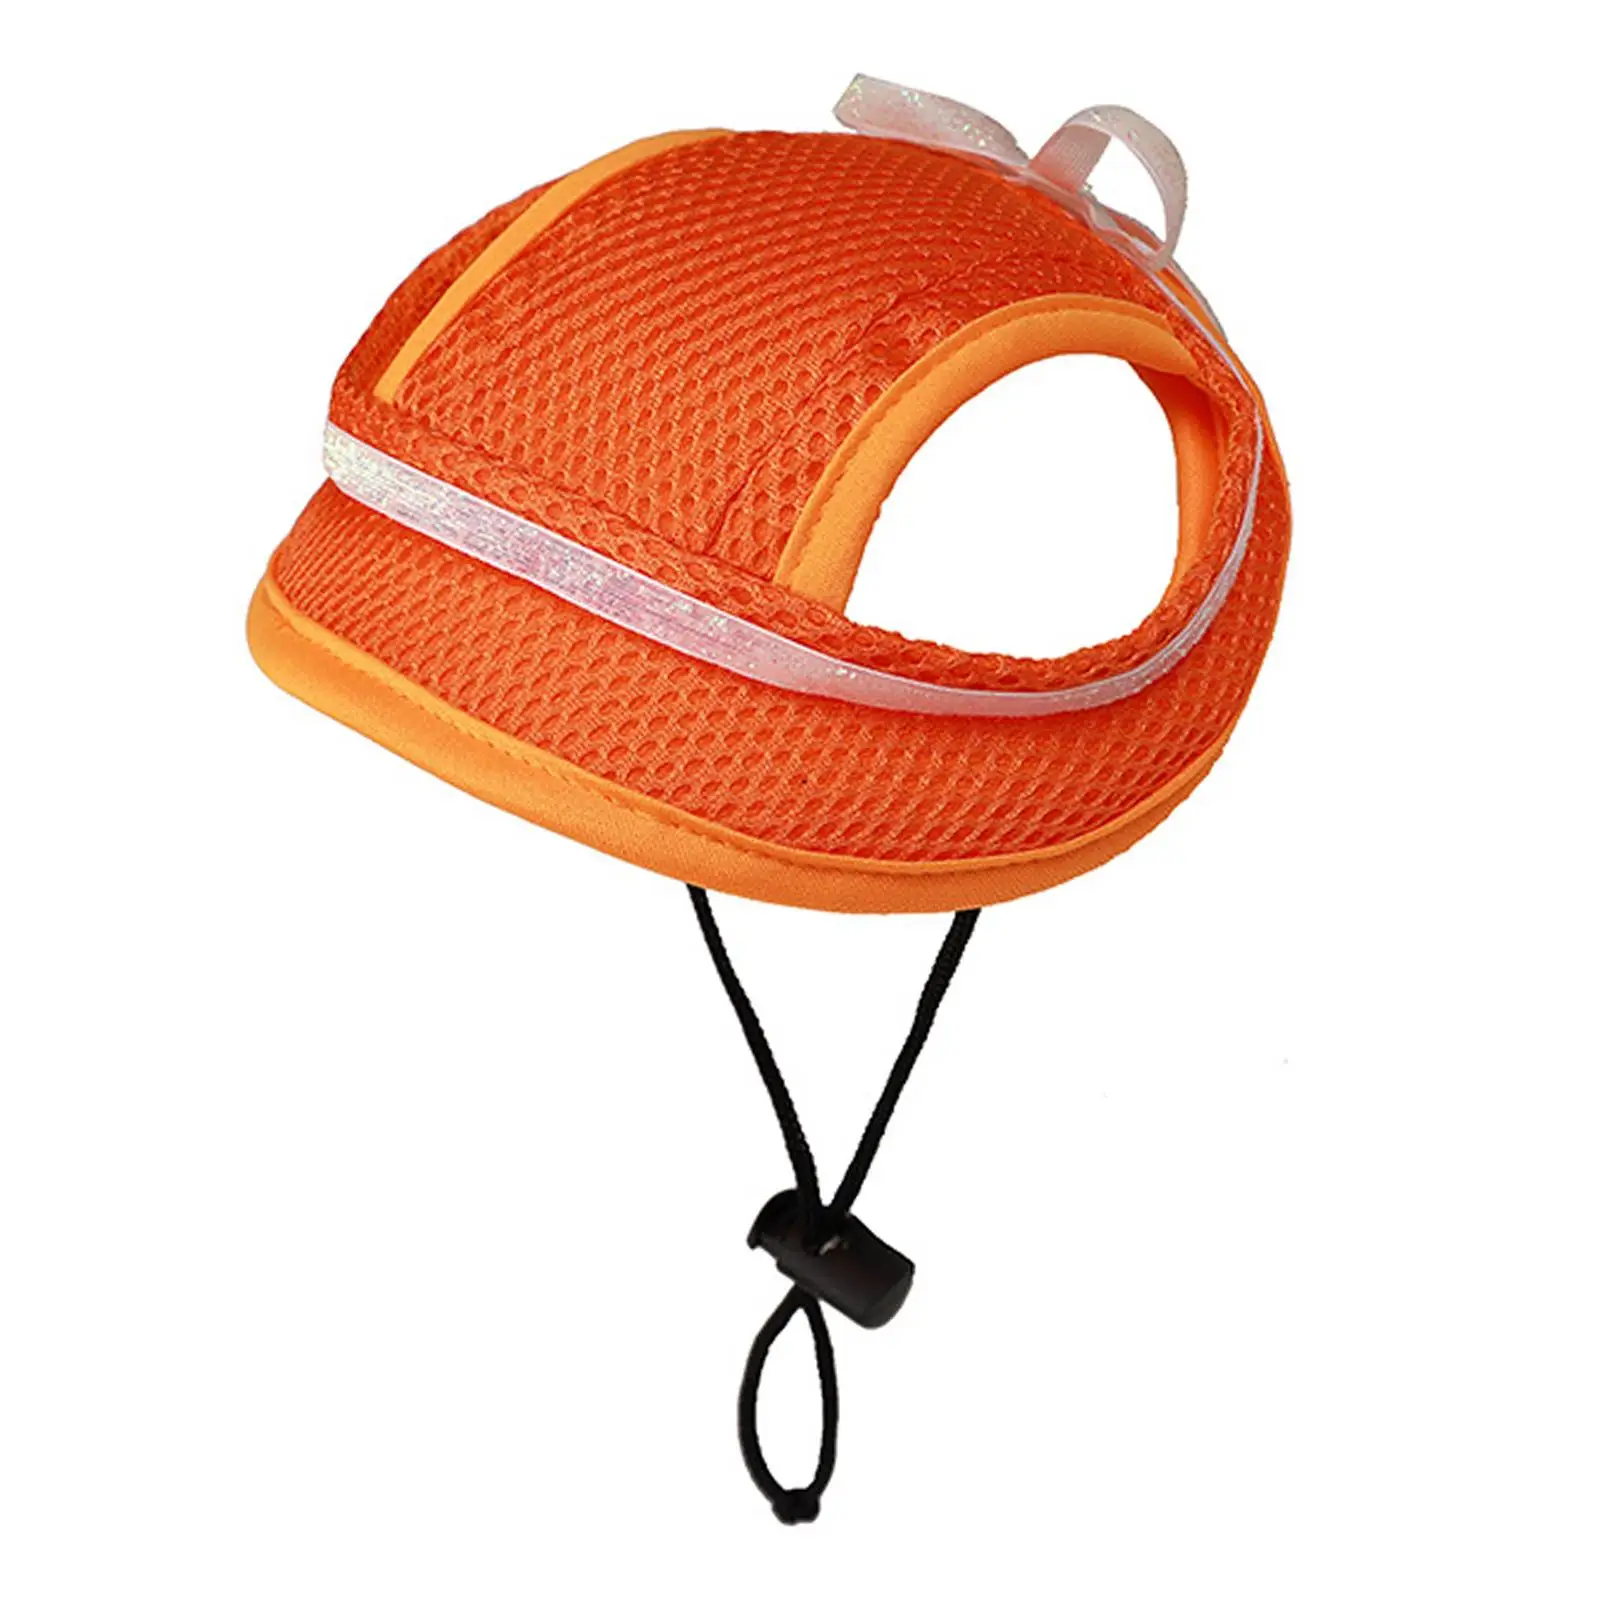 Dog Sun Cap Headwear Bucket Hat, Breathable Adjustable Chin Strap Dog Hat Cats Visor Hat for Outdoor Sports Summer Walking